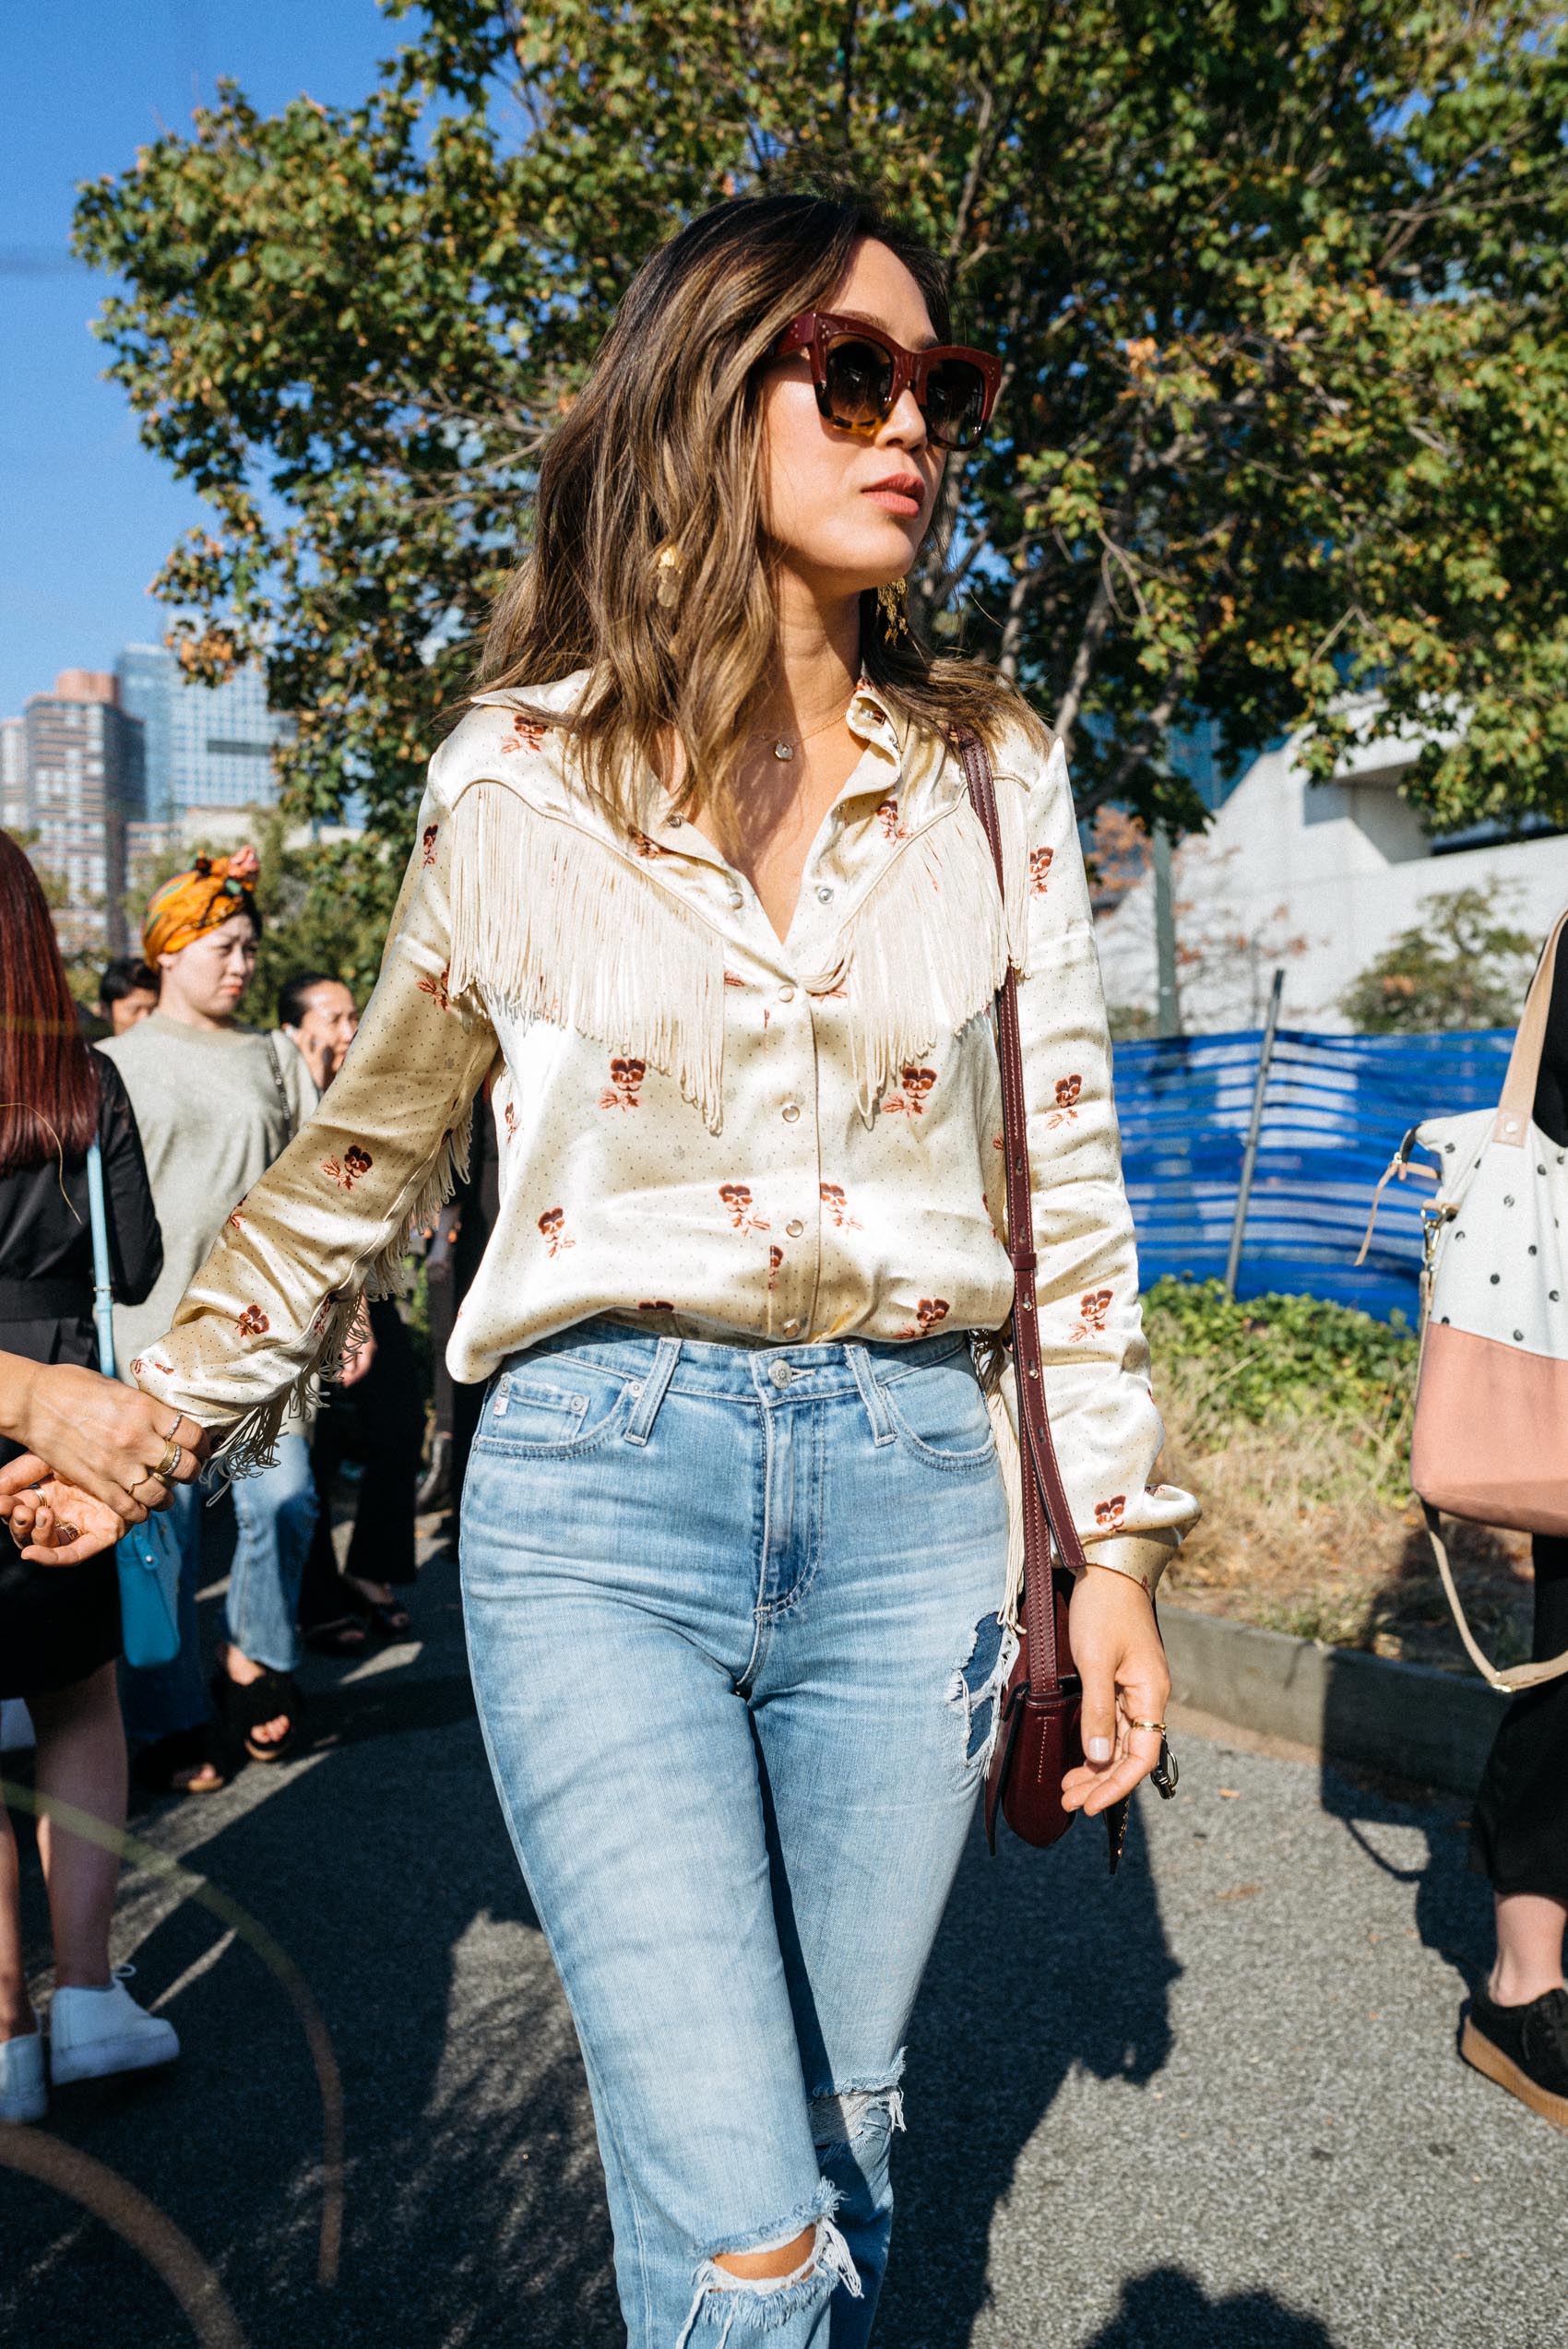 Blogger Aimee Song at New York Fashion Week